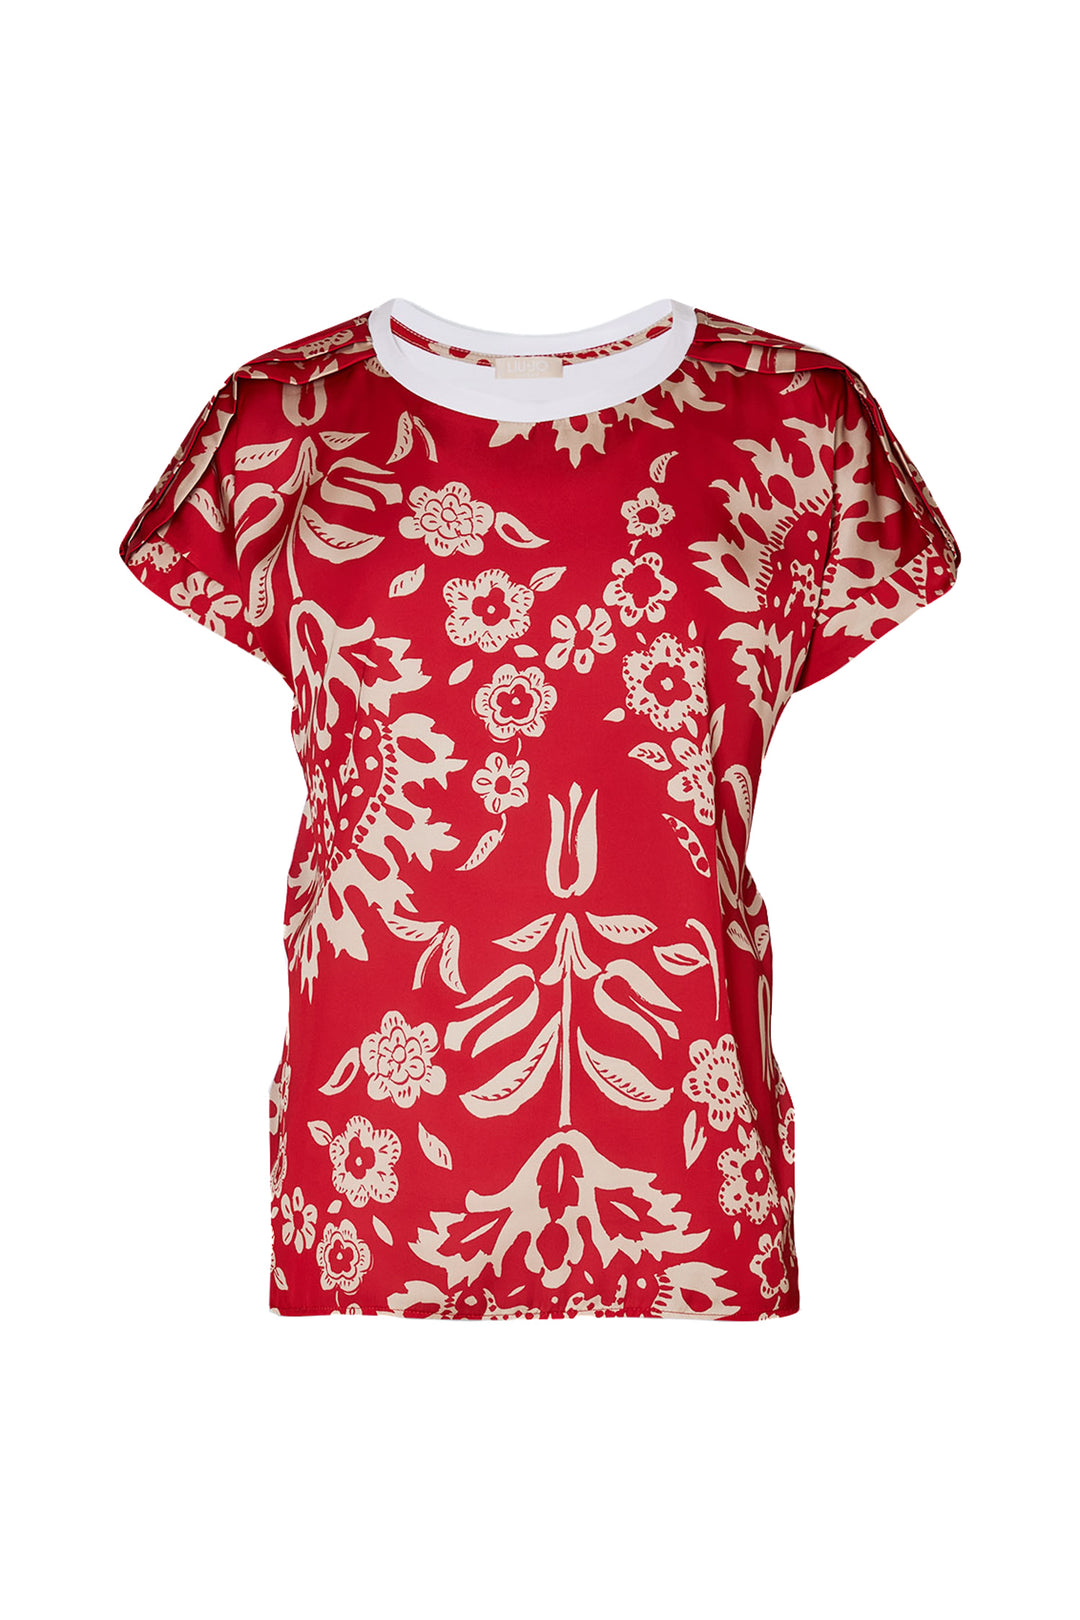 LIU JO T-shirt bianca con stampa arazzo rossa frontale - Mancinelli 1954